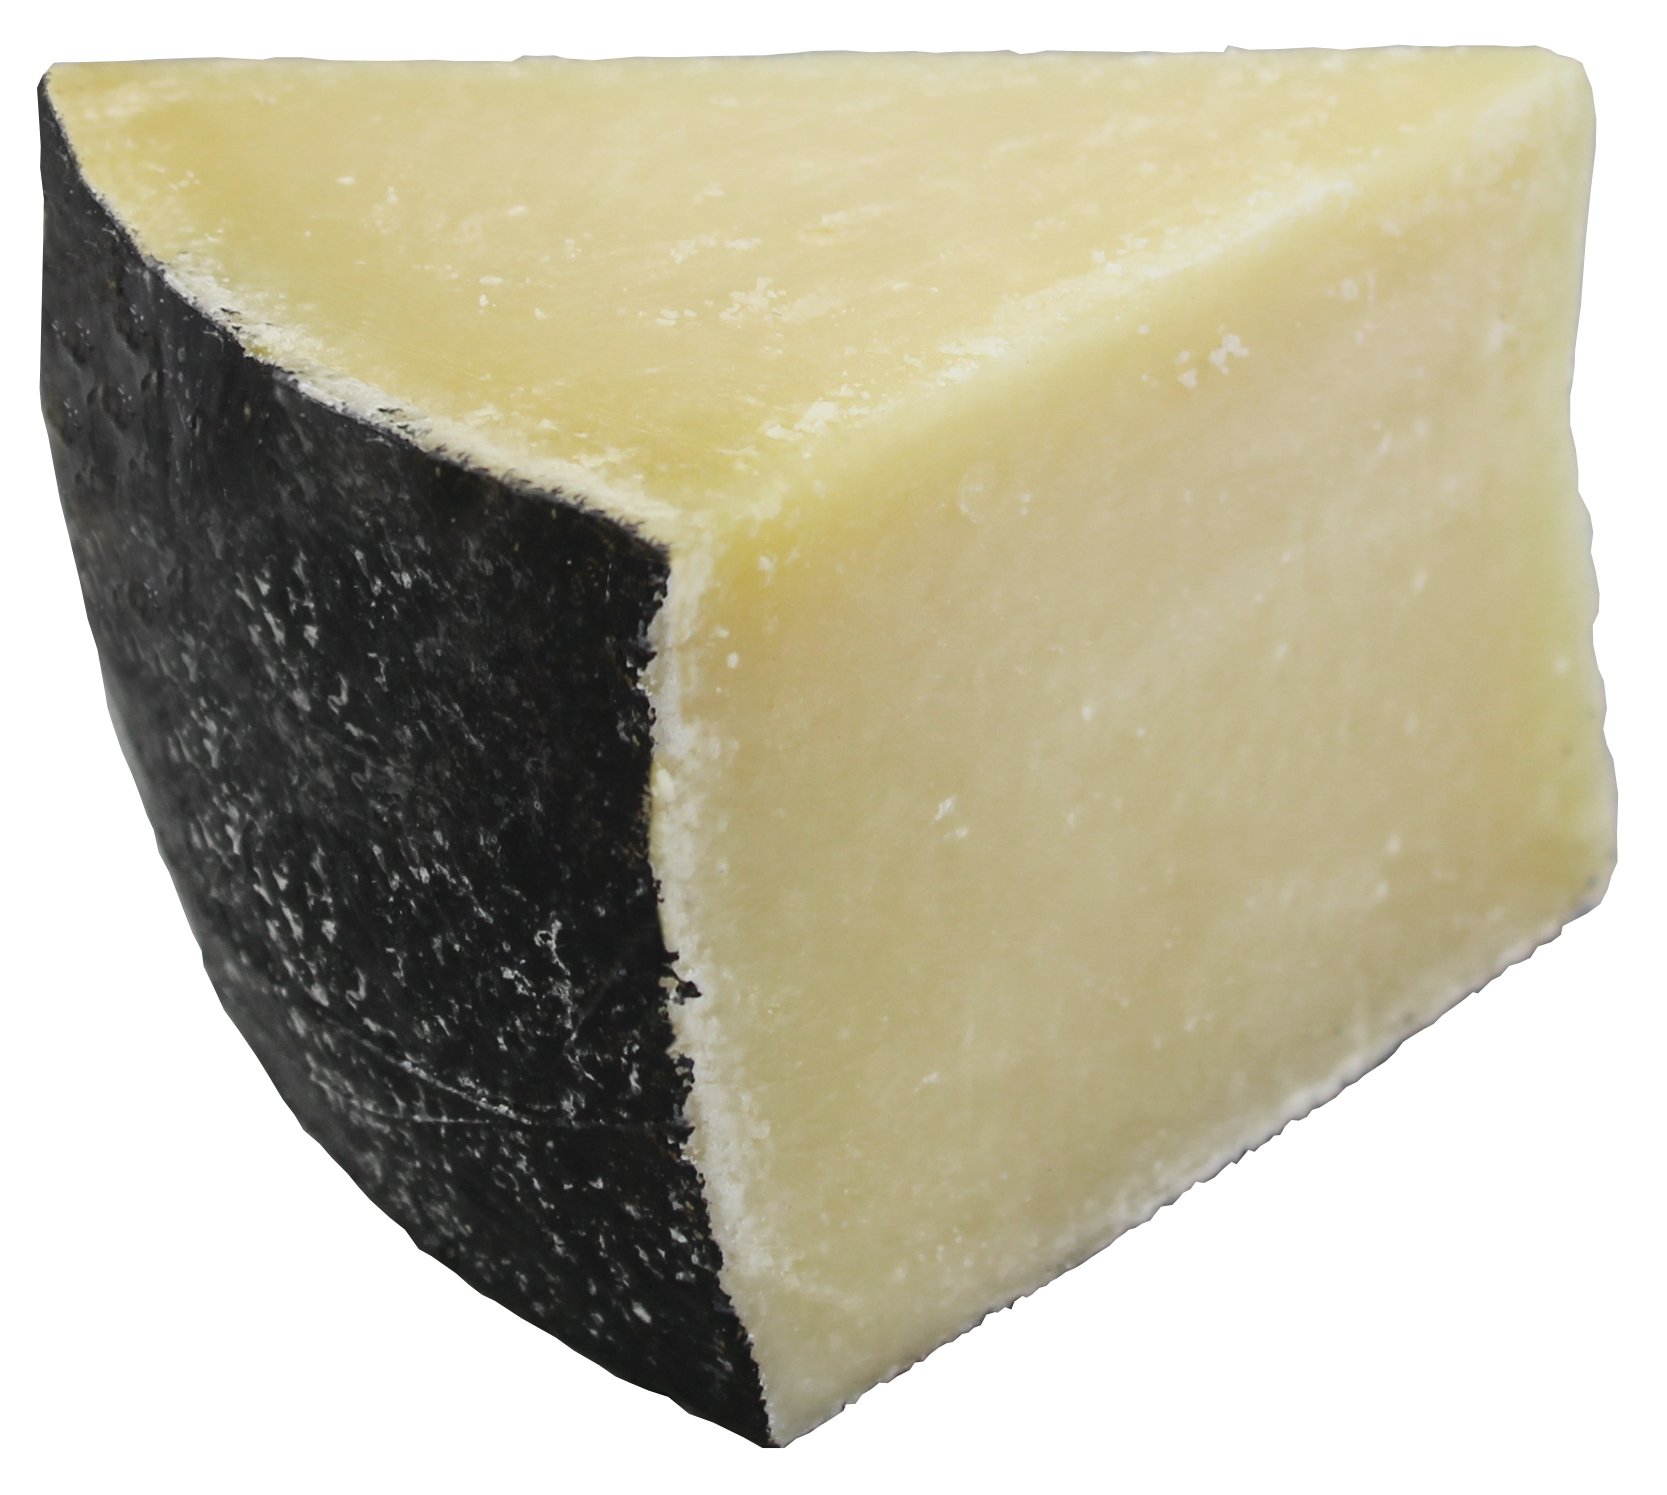 Mitica Mitica Sardo - Shop Cheese at H-E-B